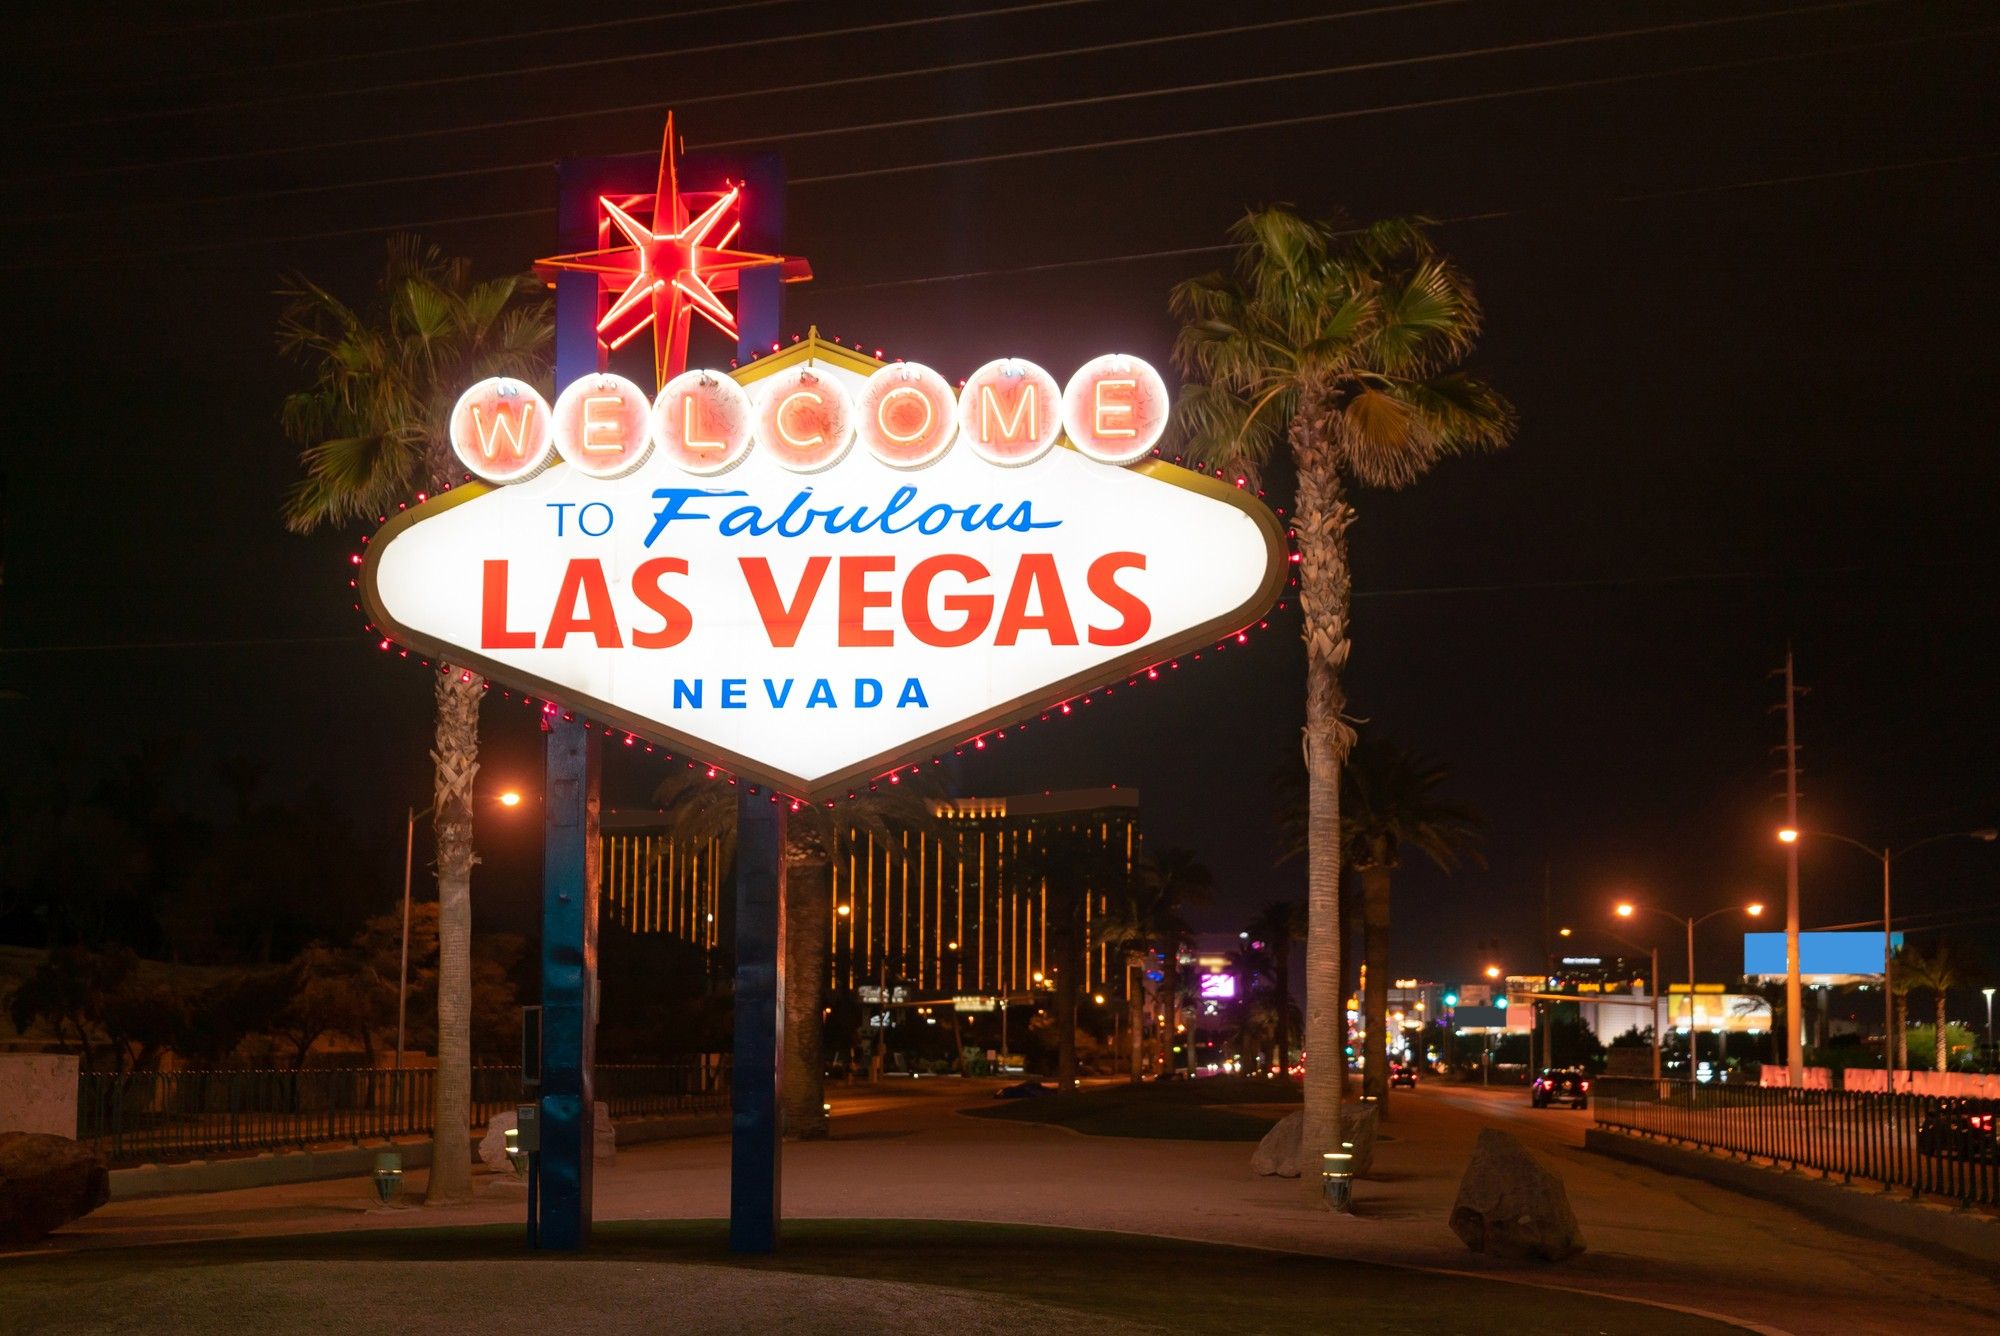 Should a Las Vegas karaoke bar reopen during the pandemic?